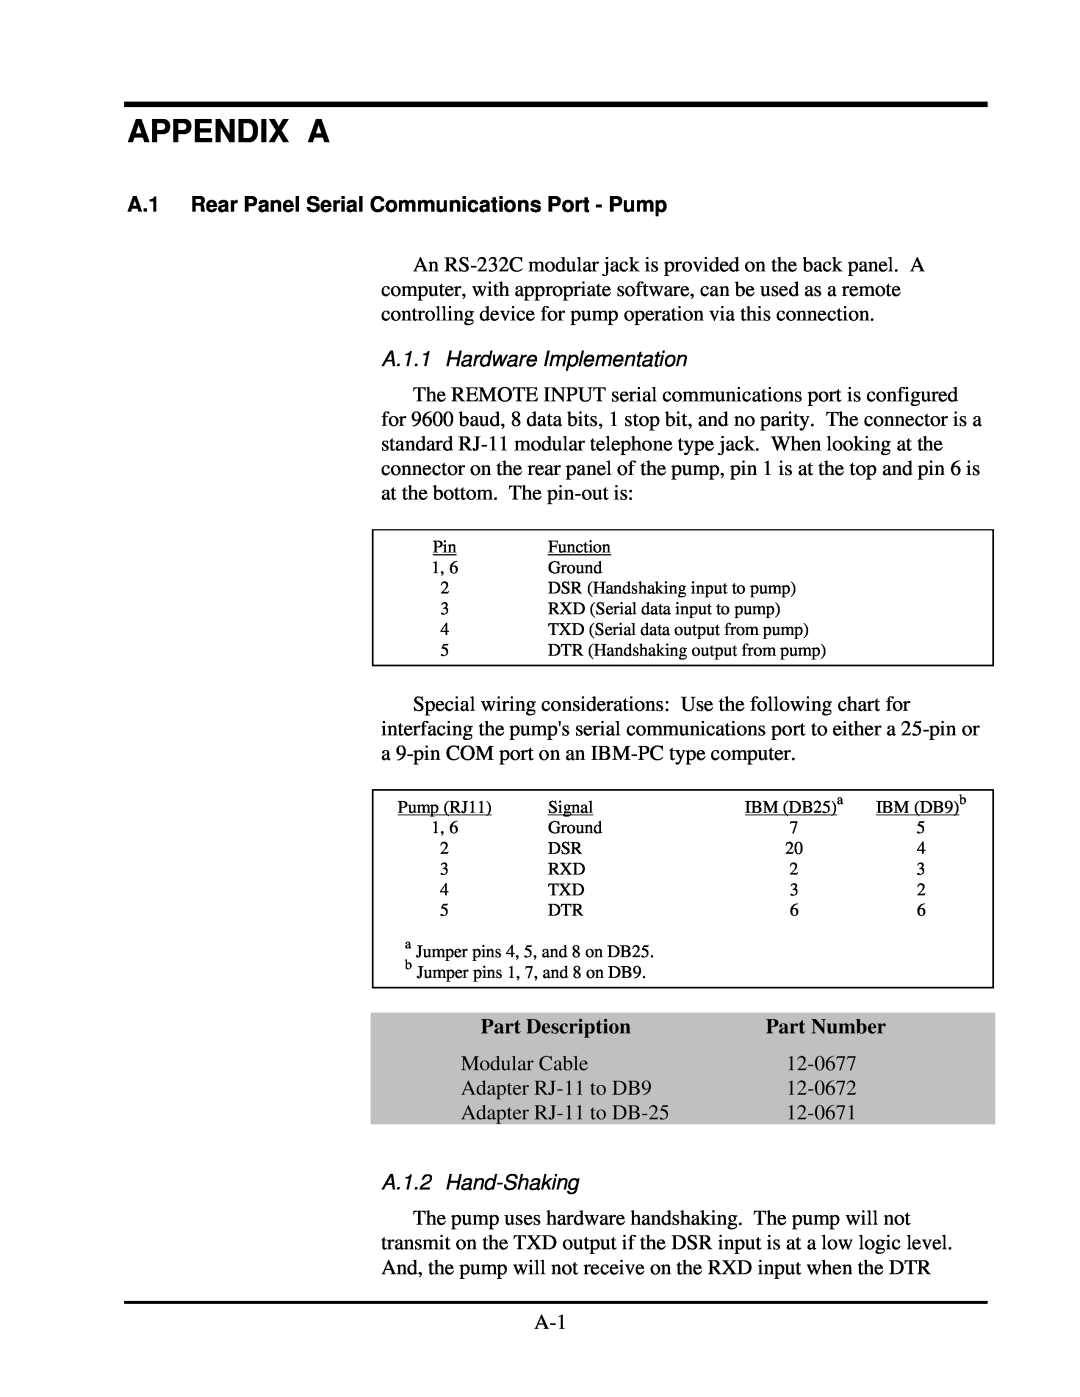 SSI America 90-2581 REV B Appendix A, A.1.1 Hardware Implementation, Part Description, Part Number, A.1.2 Hand-Shaking 